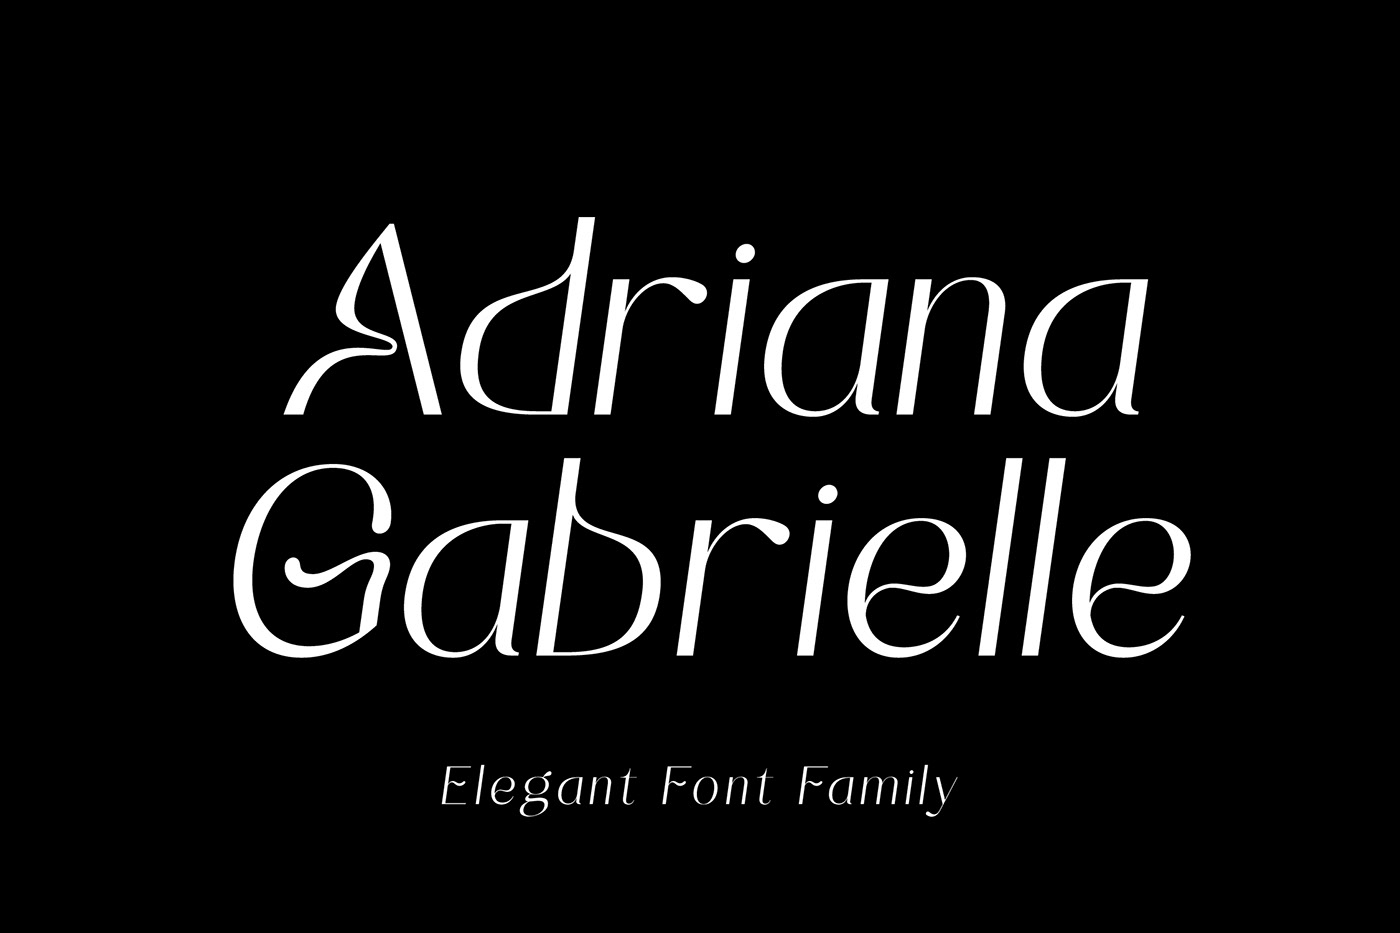 Fashion font elegant font font family Typeface type design display font typeface design classy font beauty font aesthetic font